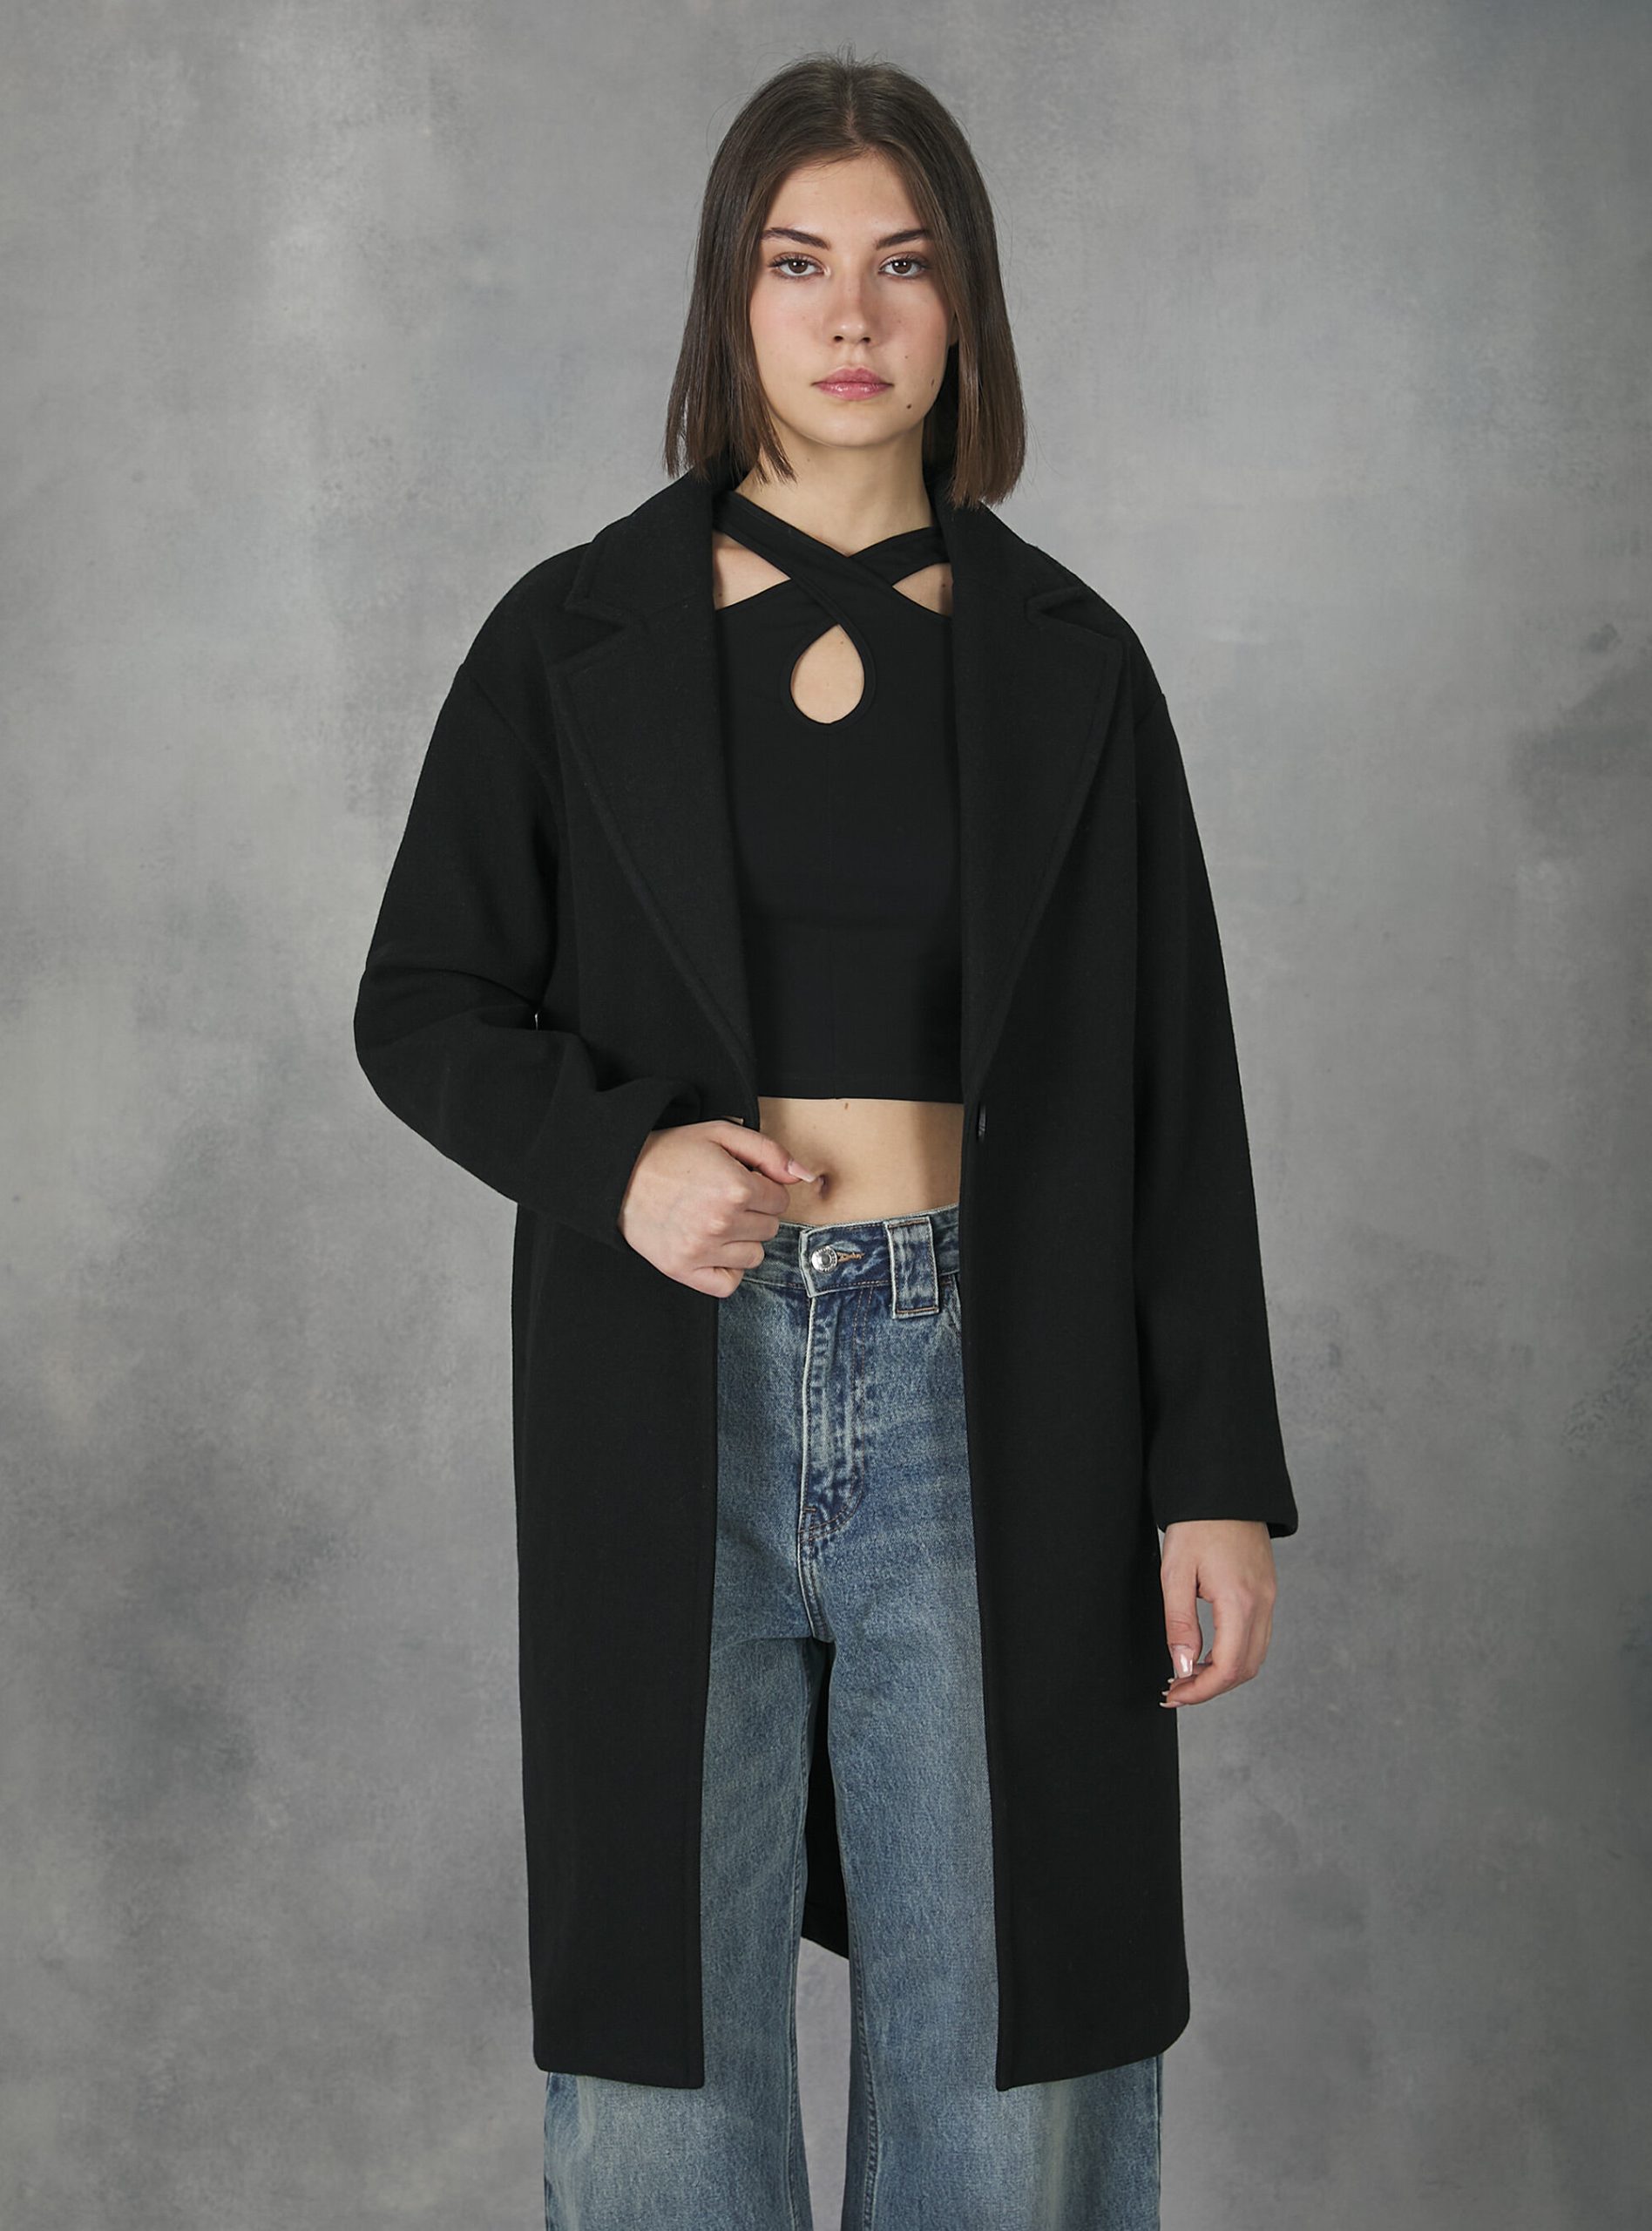 Mäntel Und Jacken Günstig Bk1 Black Plain-Coloured Gauze Knit Coat Alcott Frauen – 1